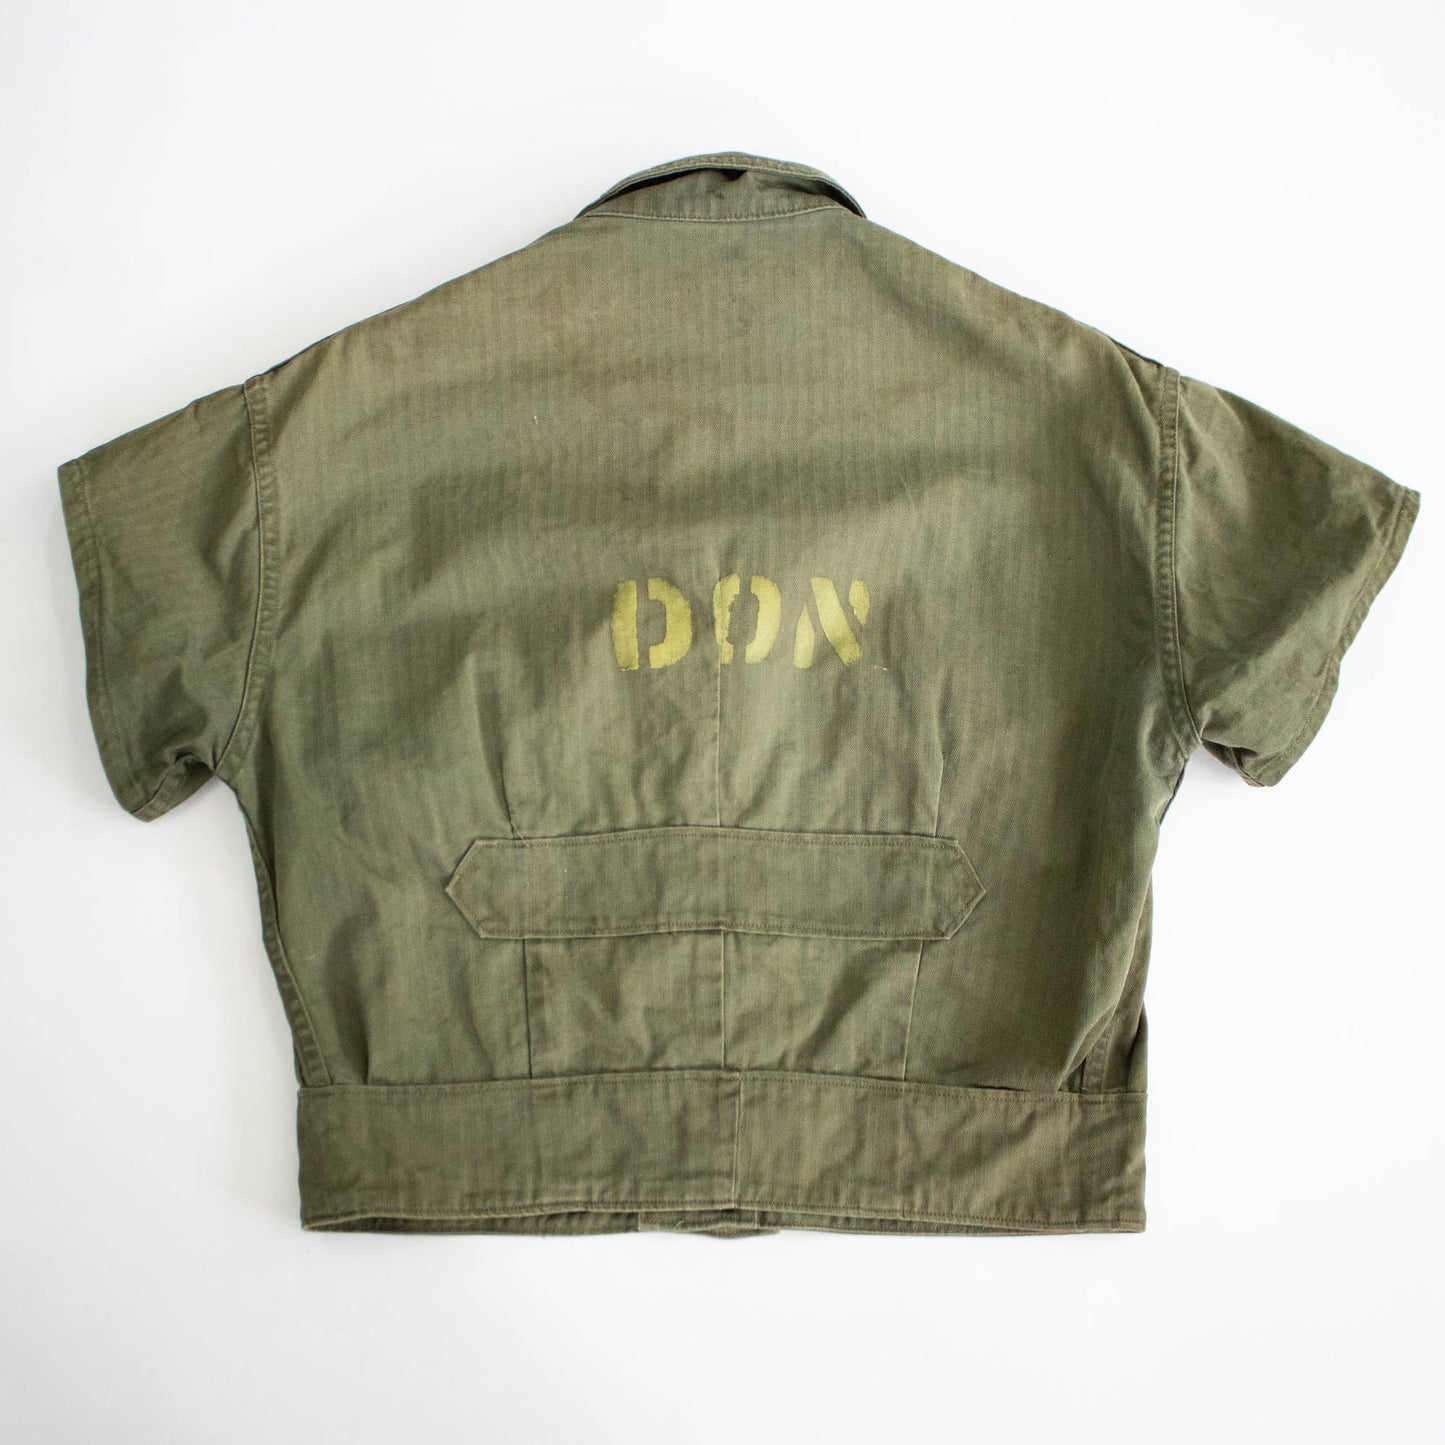 Modified Navy Hbt Shirt Jacket